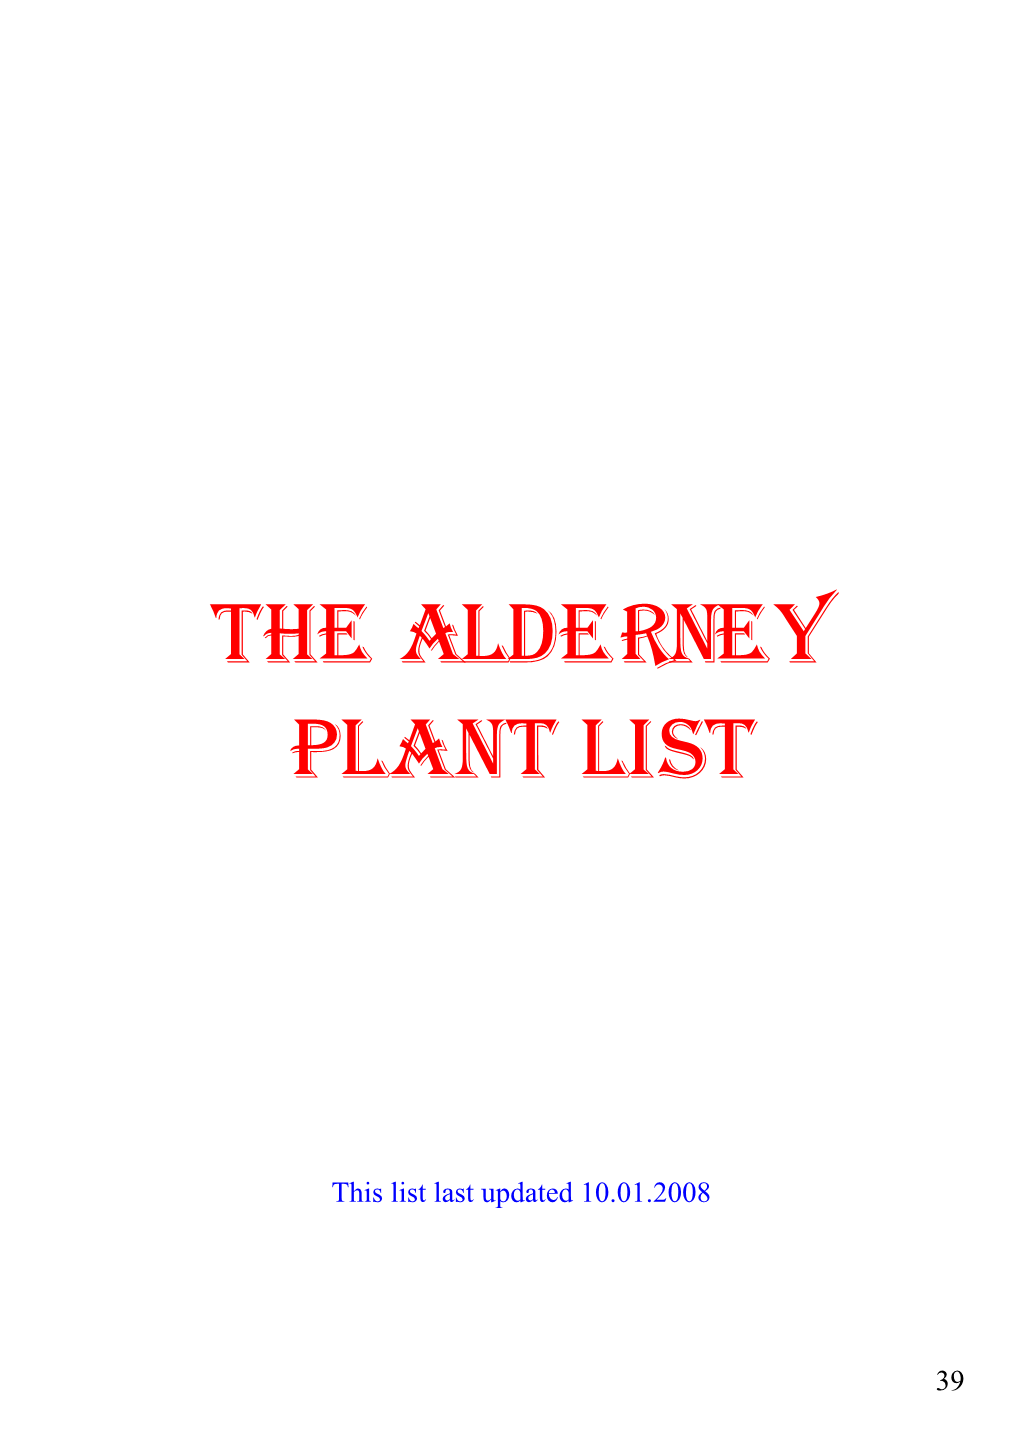 THE Alderney PLA NT LIST